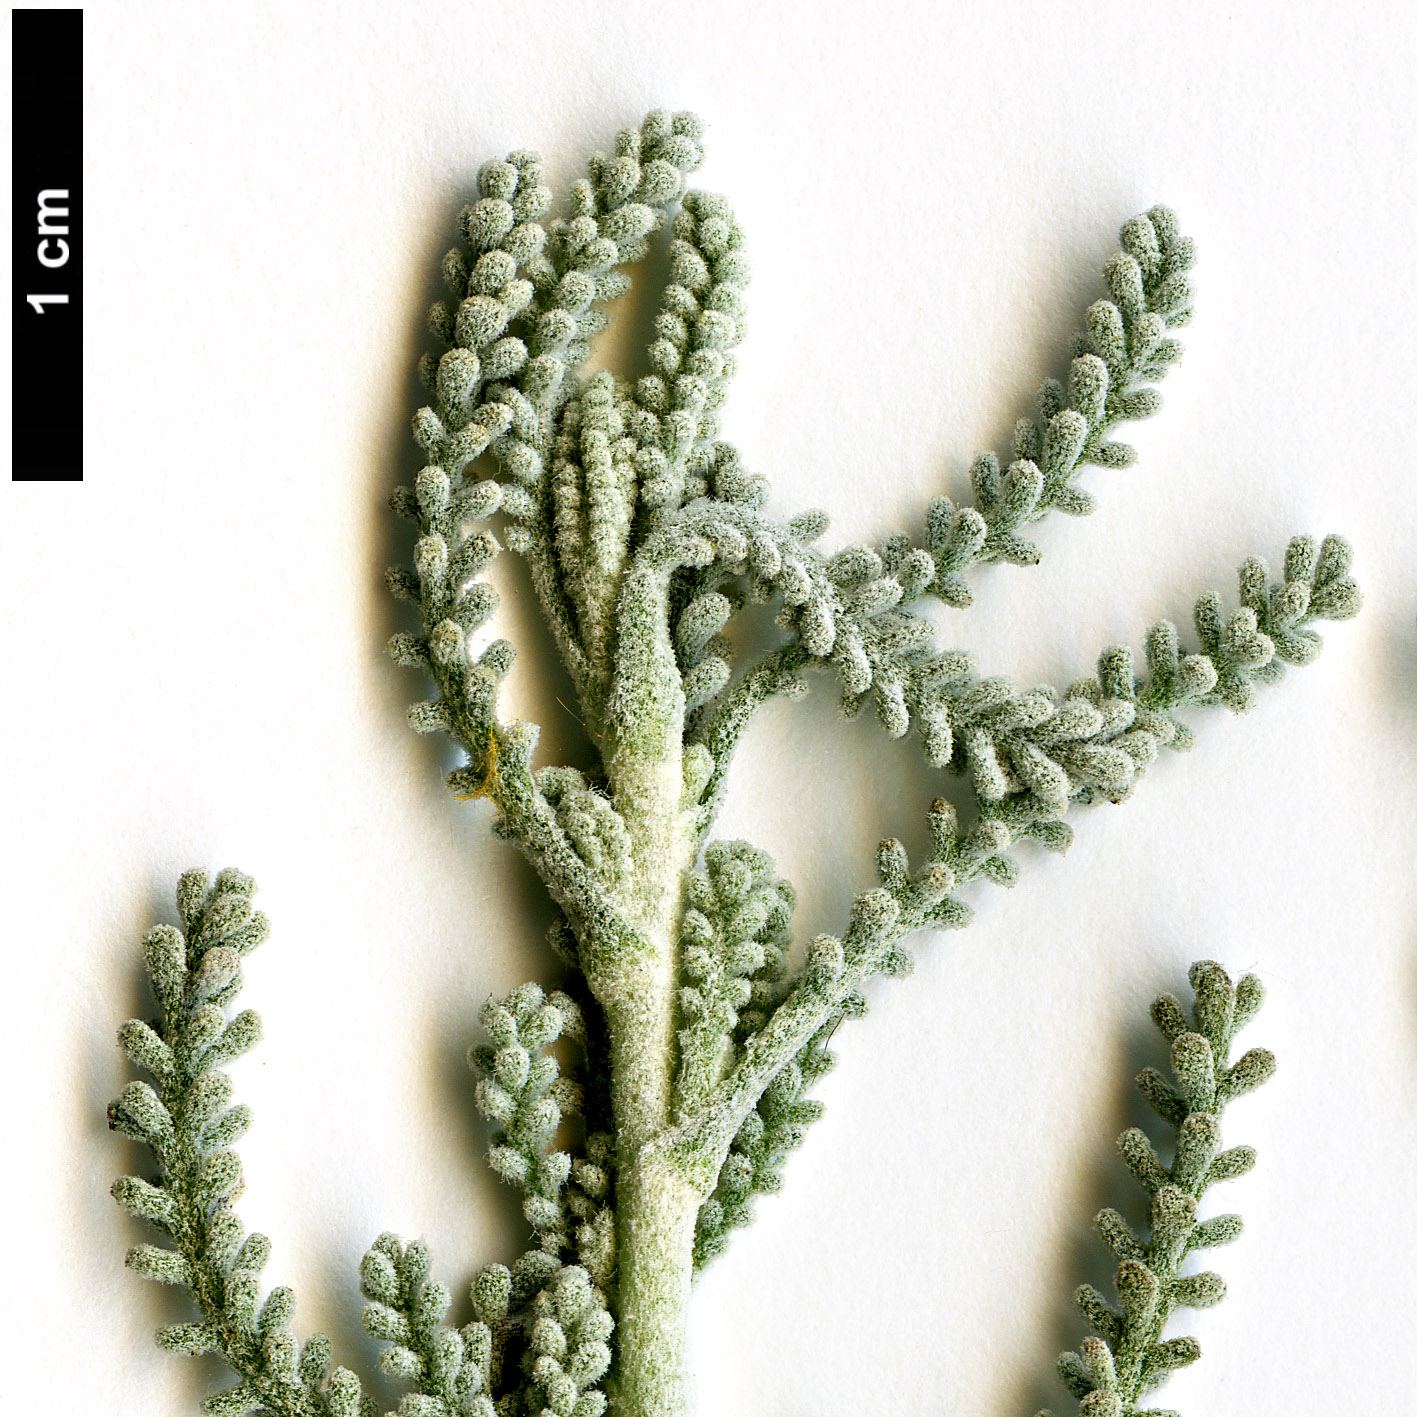 High resolution image: Family: Asteraceae - Genus: Santolina - Taxon: chamaecyparissus